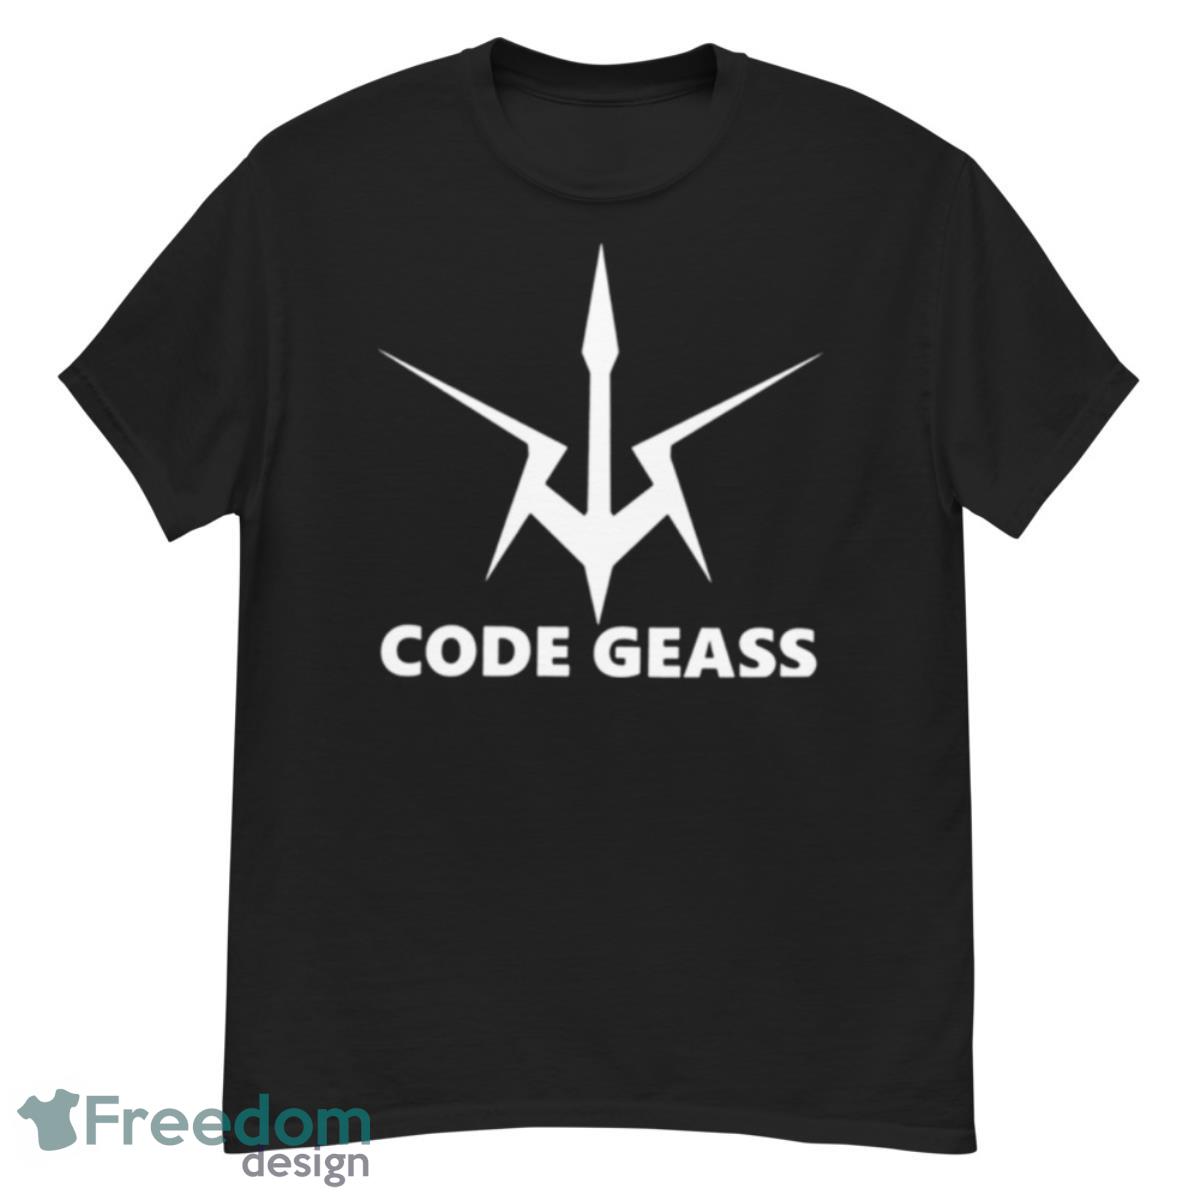 Code Geass Logo Typographic Design shirt - G500 Men’s Classic T-Shirt